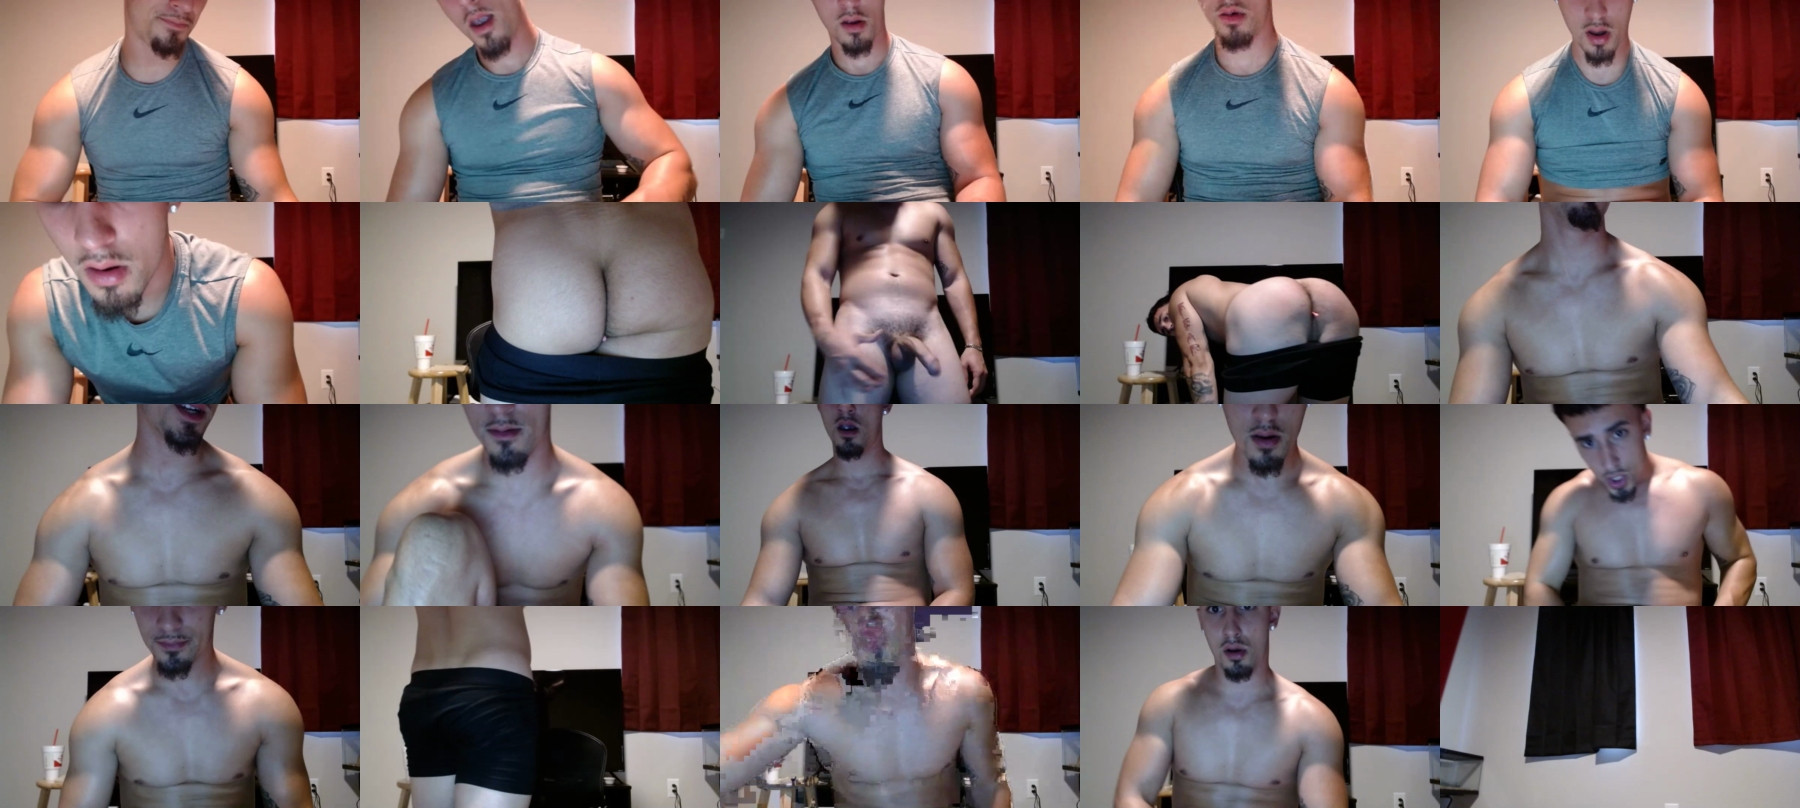 Jay_Slayz  23-05-2021 Male Webcam